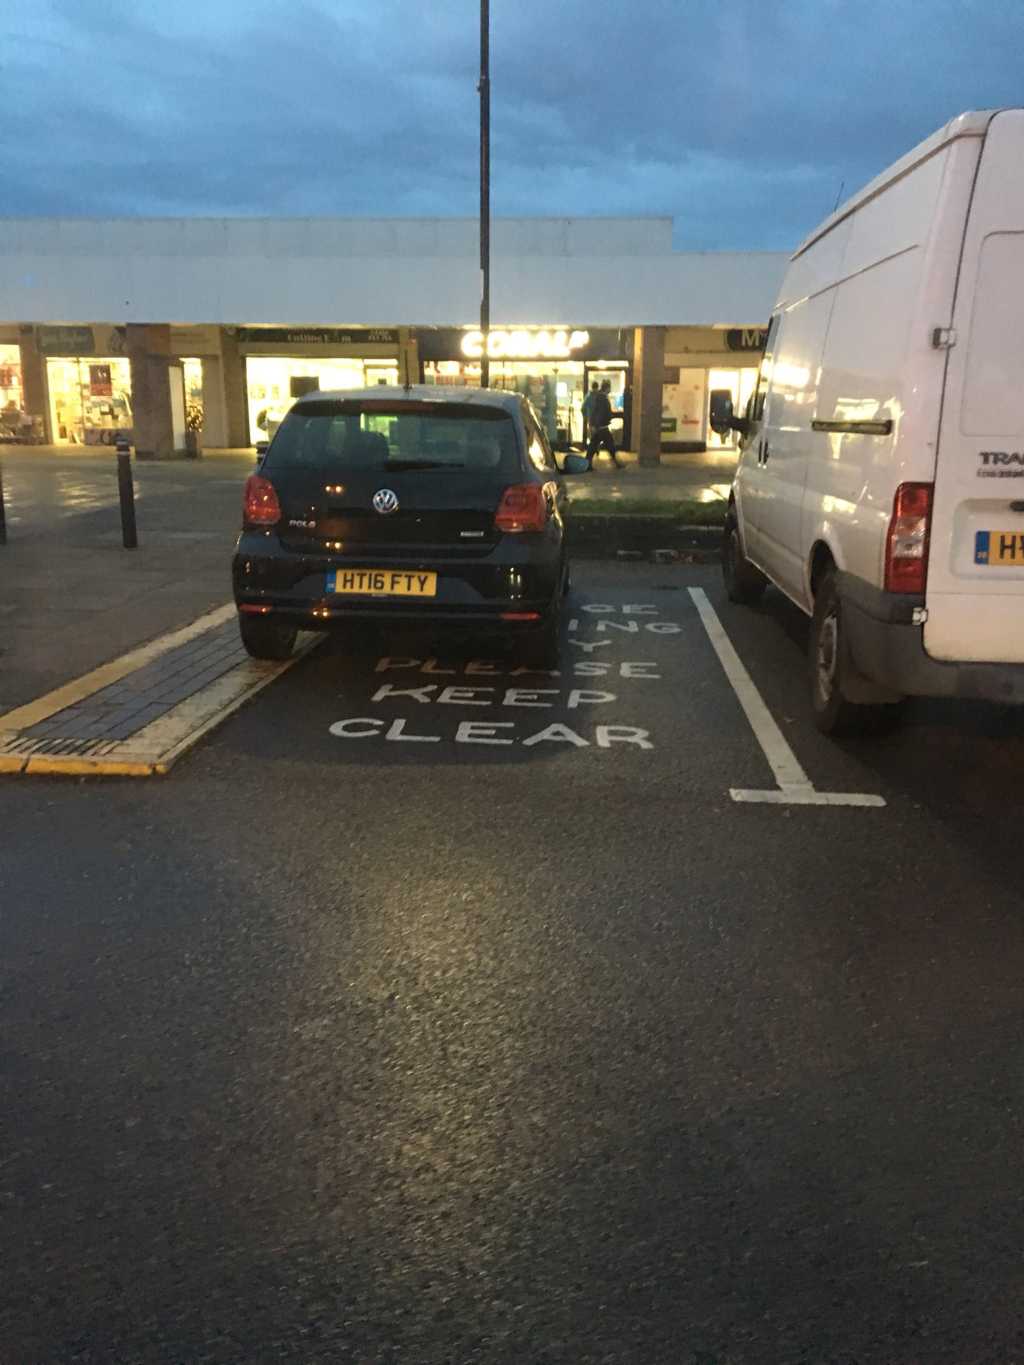 HT16FTY displaying Selfish Parking